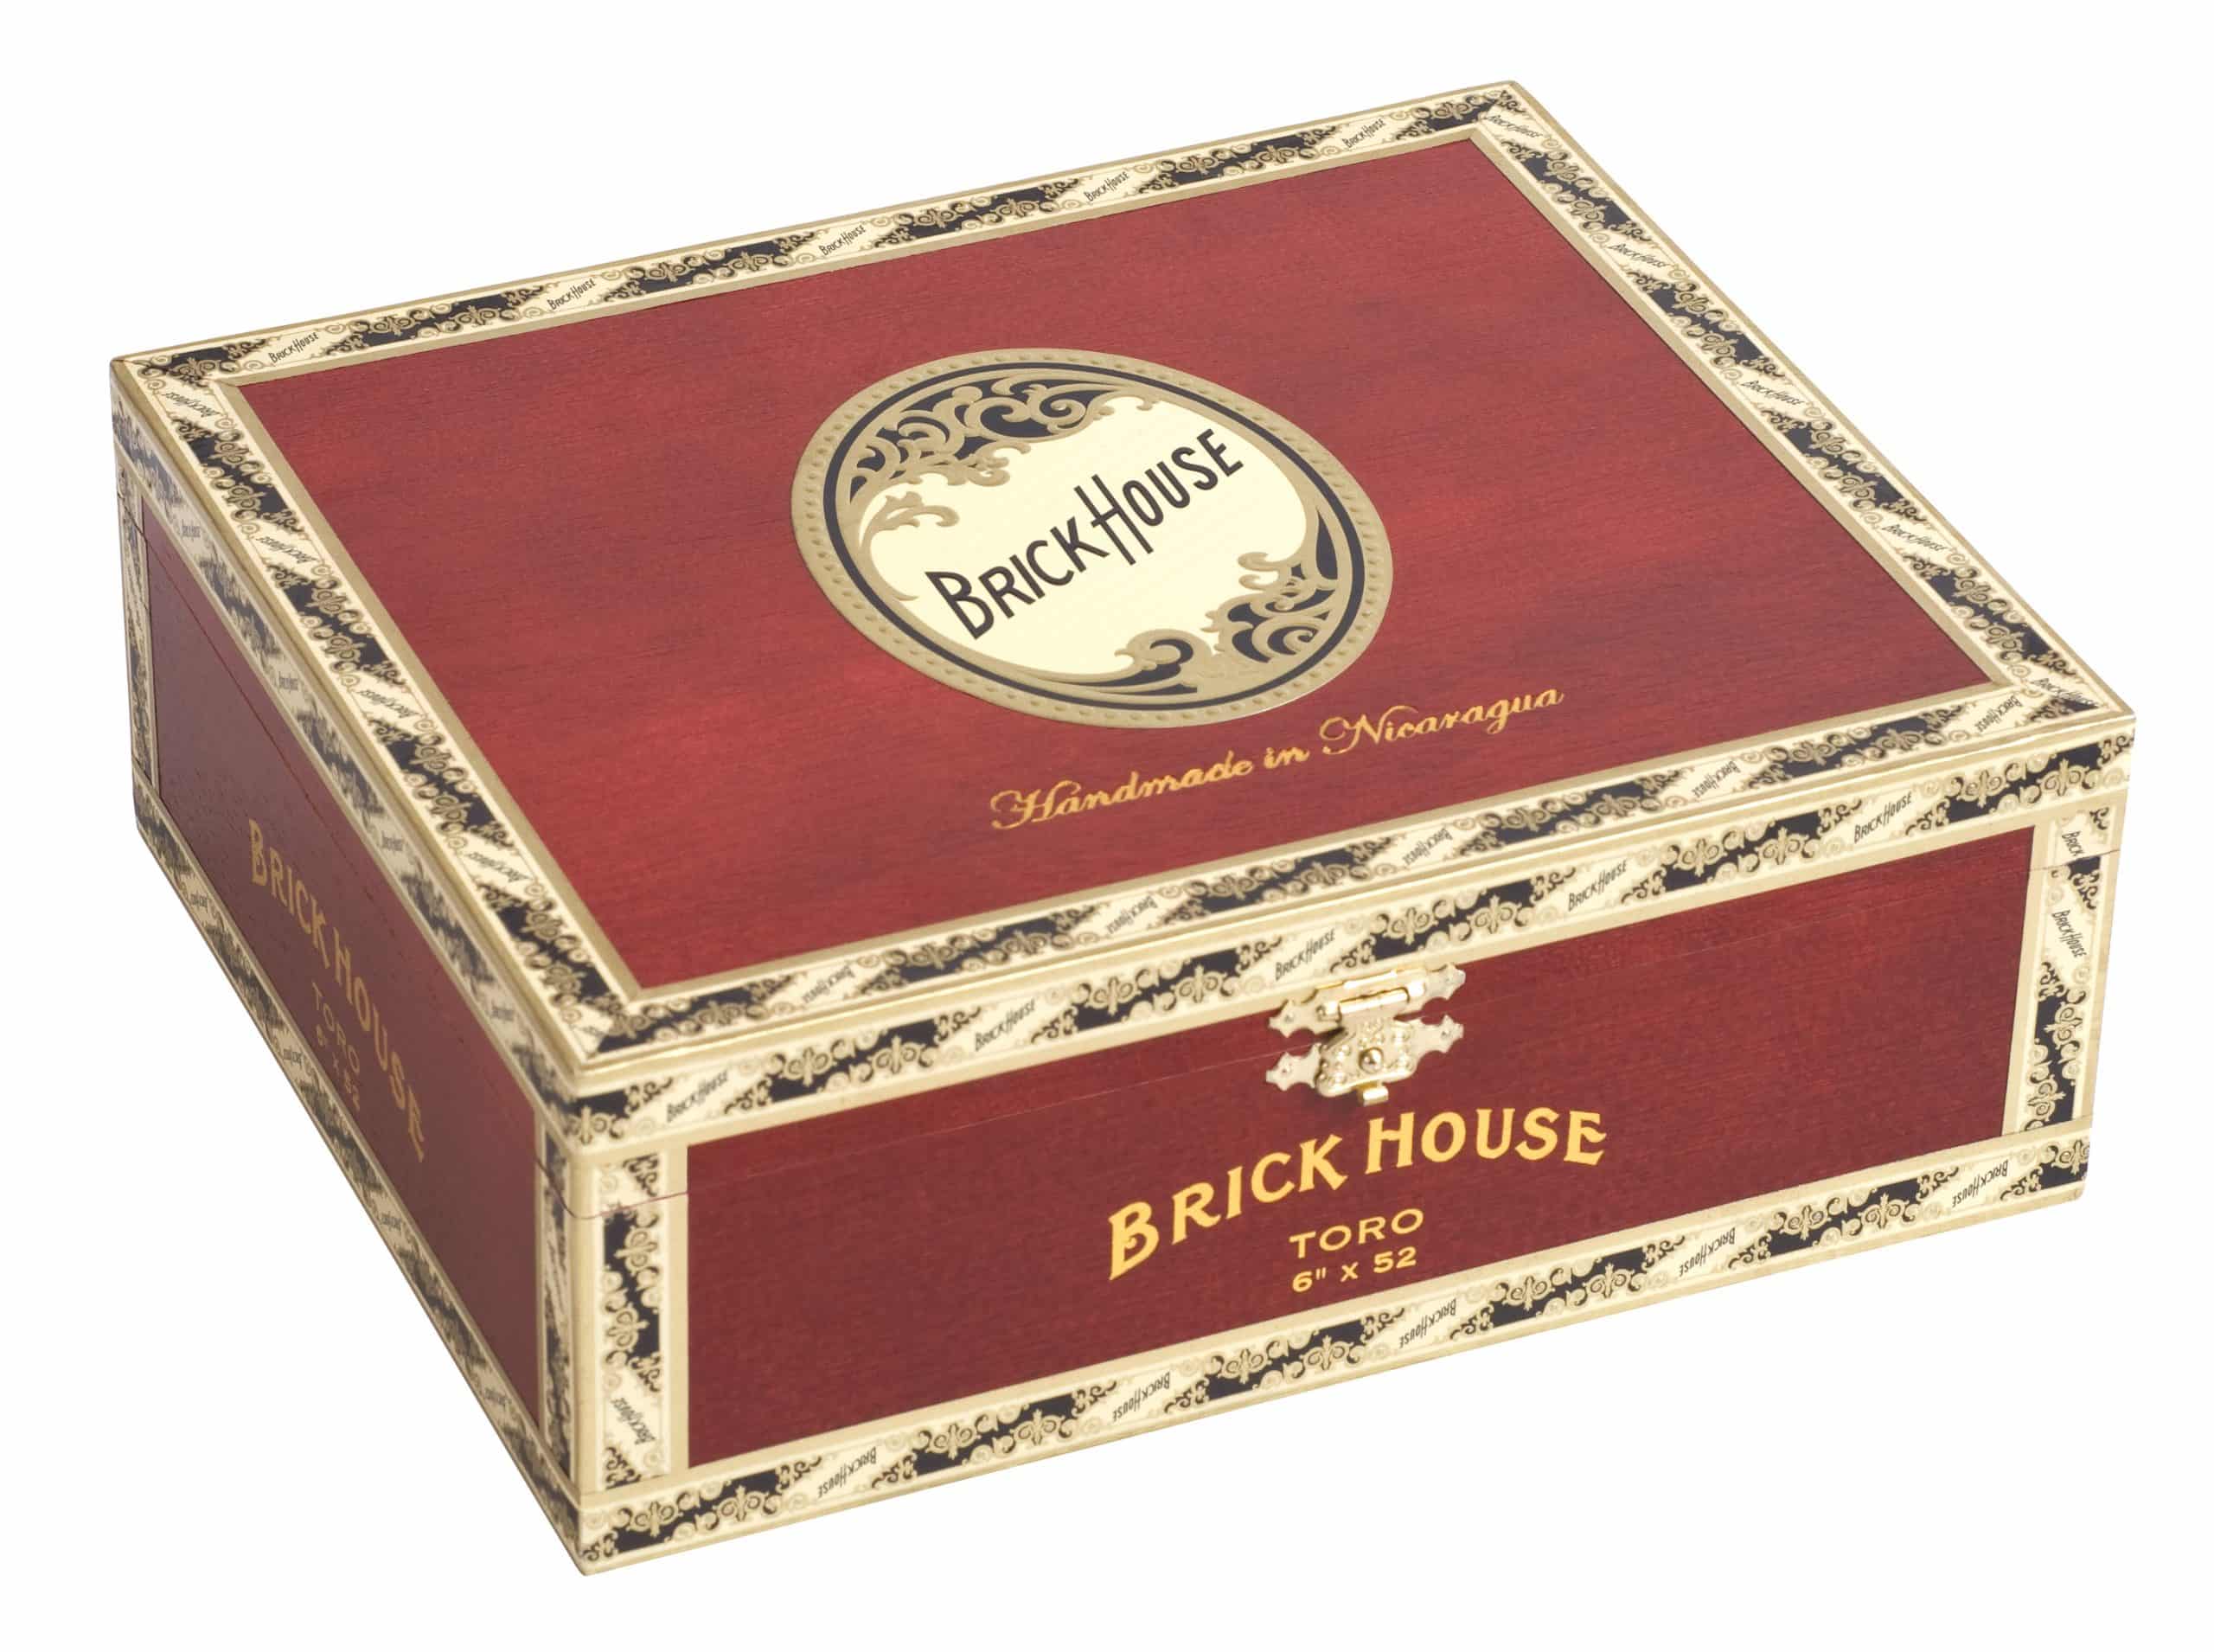 25 count closed box brick house toro cigars